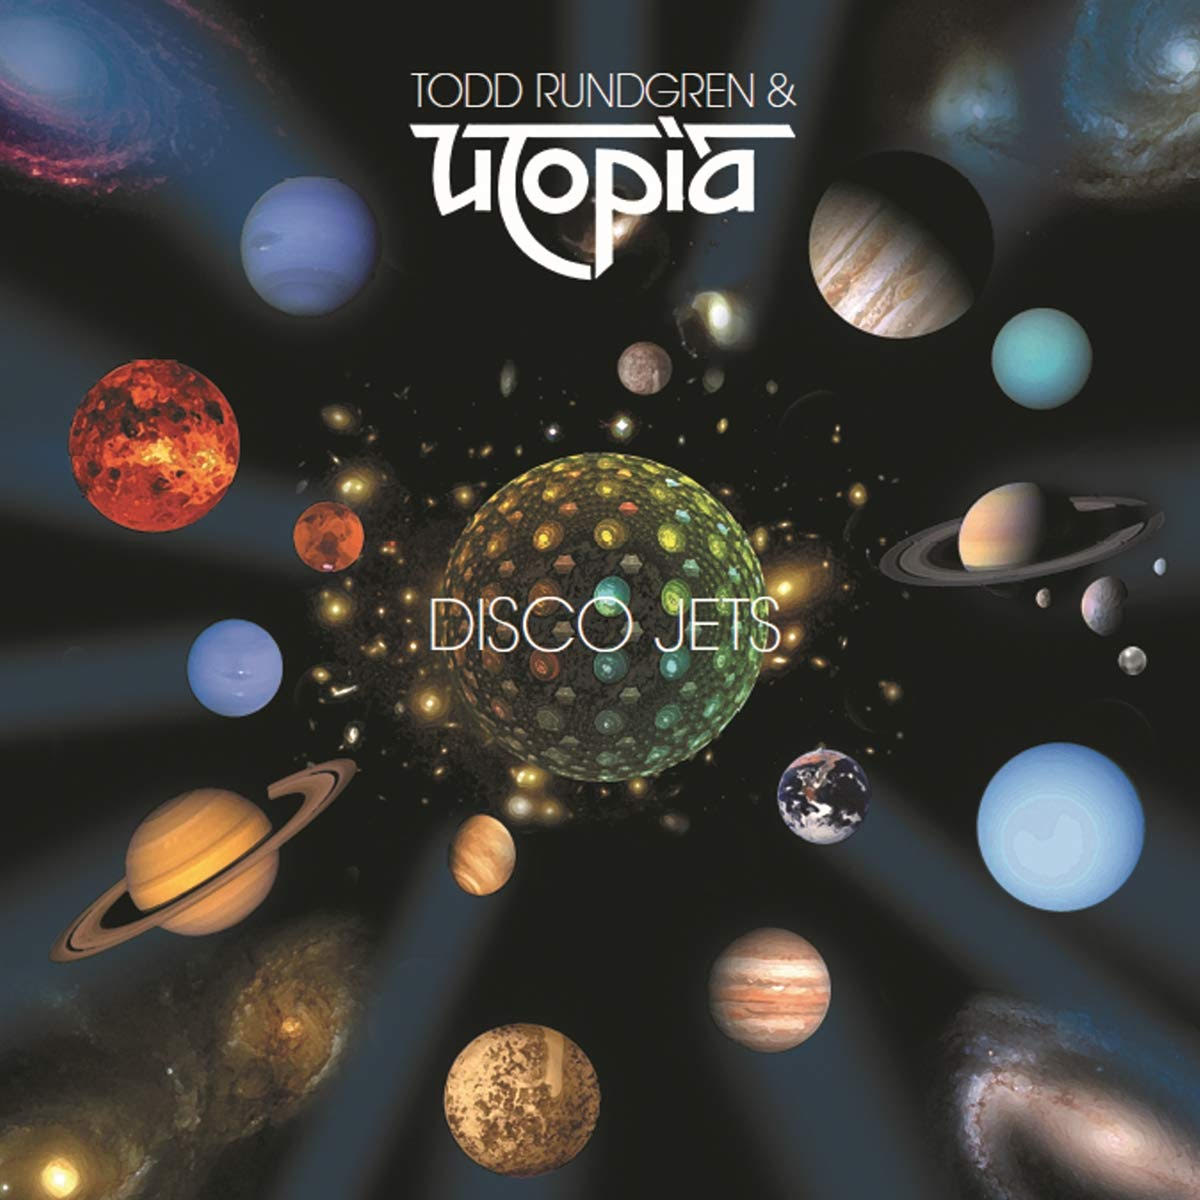 Todd Rundgren & Utopia - Disco Jets (CD - Imported)